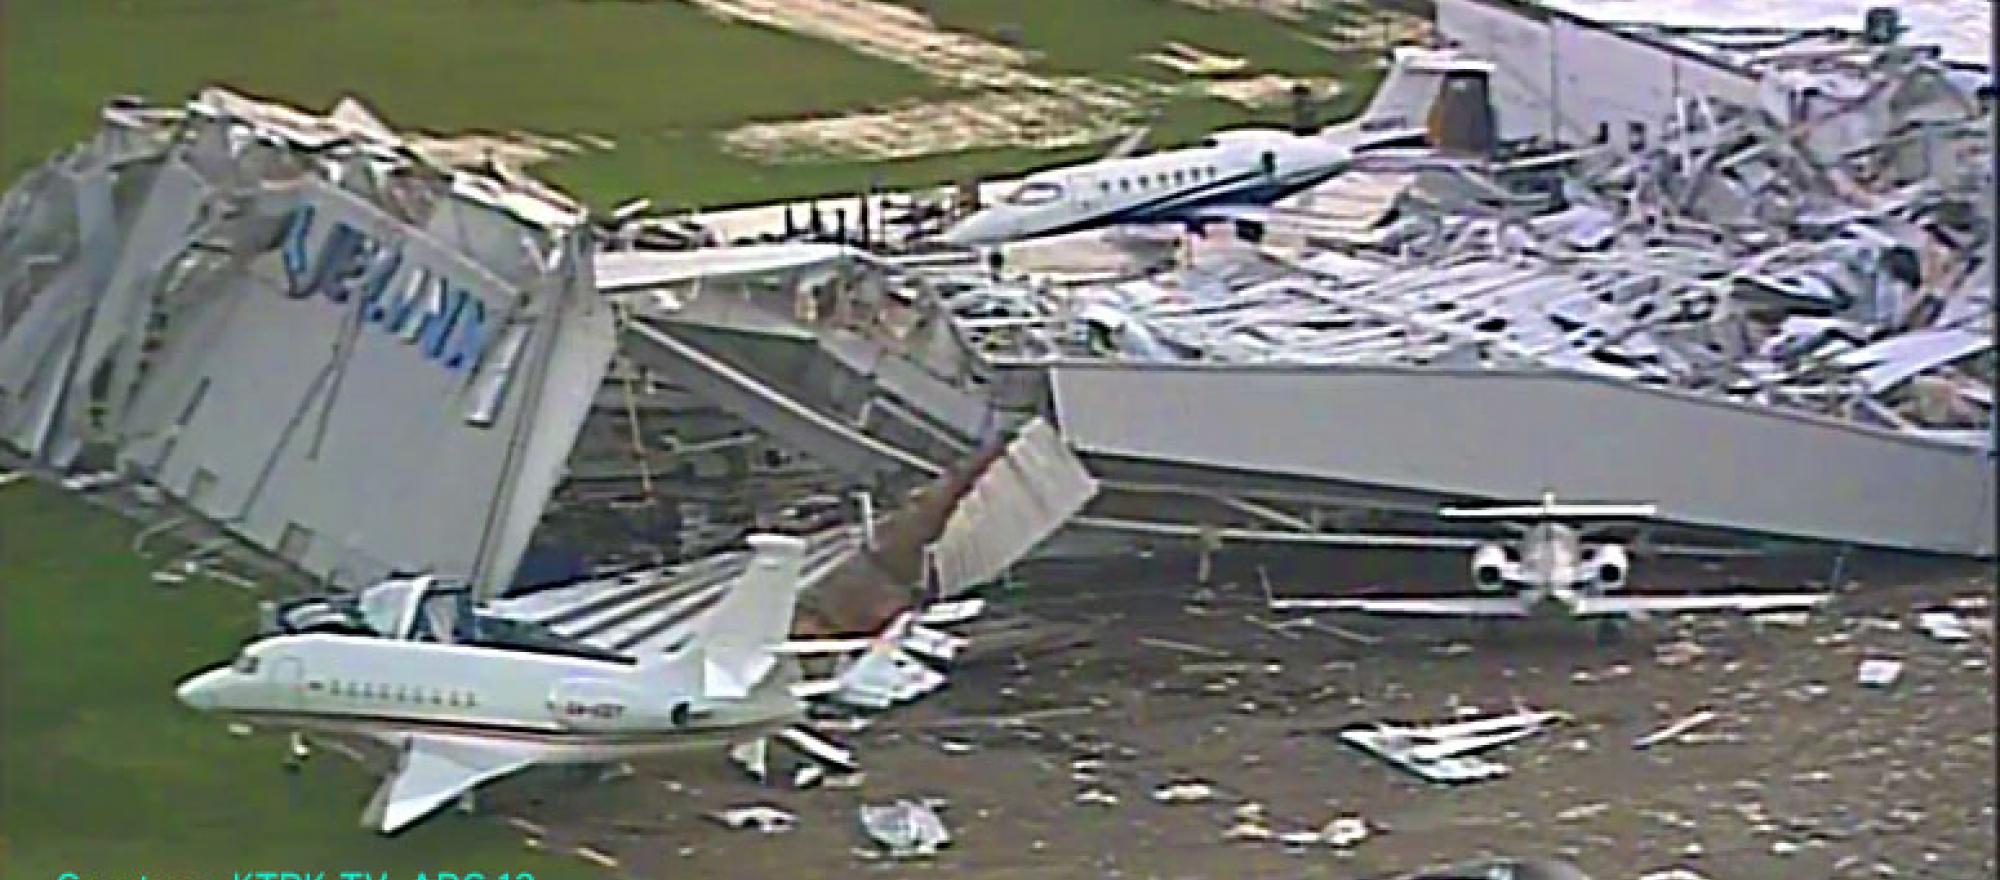 Collapsed hangar at Houston Hobby